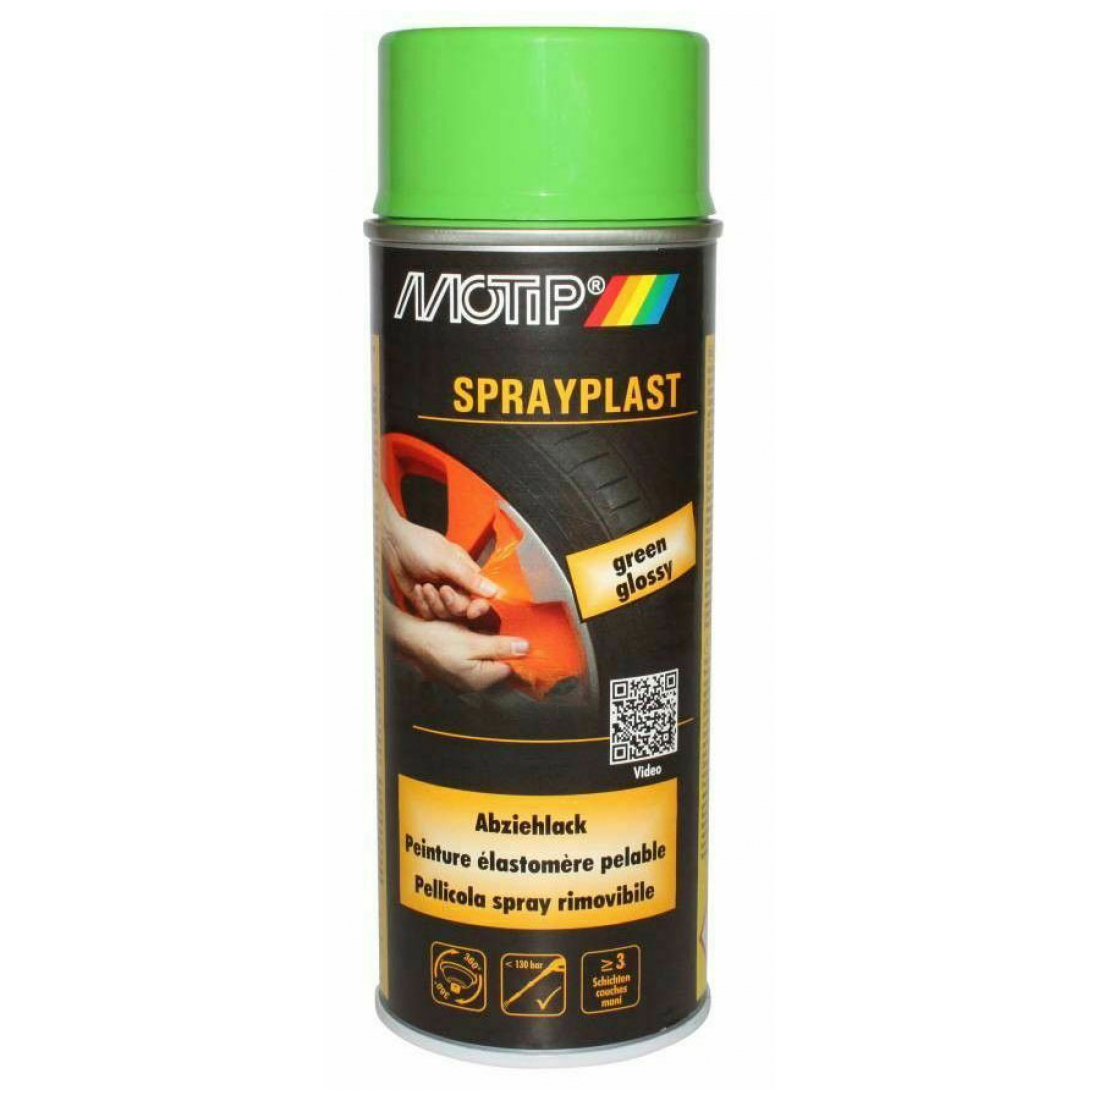 Motip Sprayplast Abziehlack grün glänzend 400 ml 396557